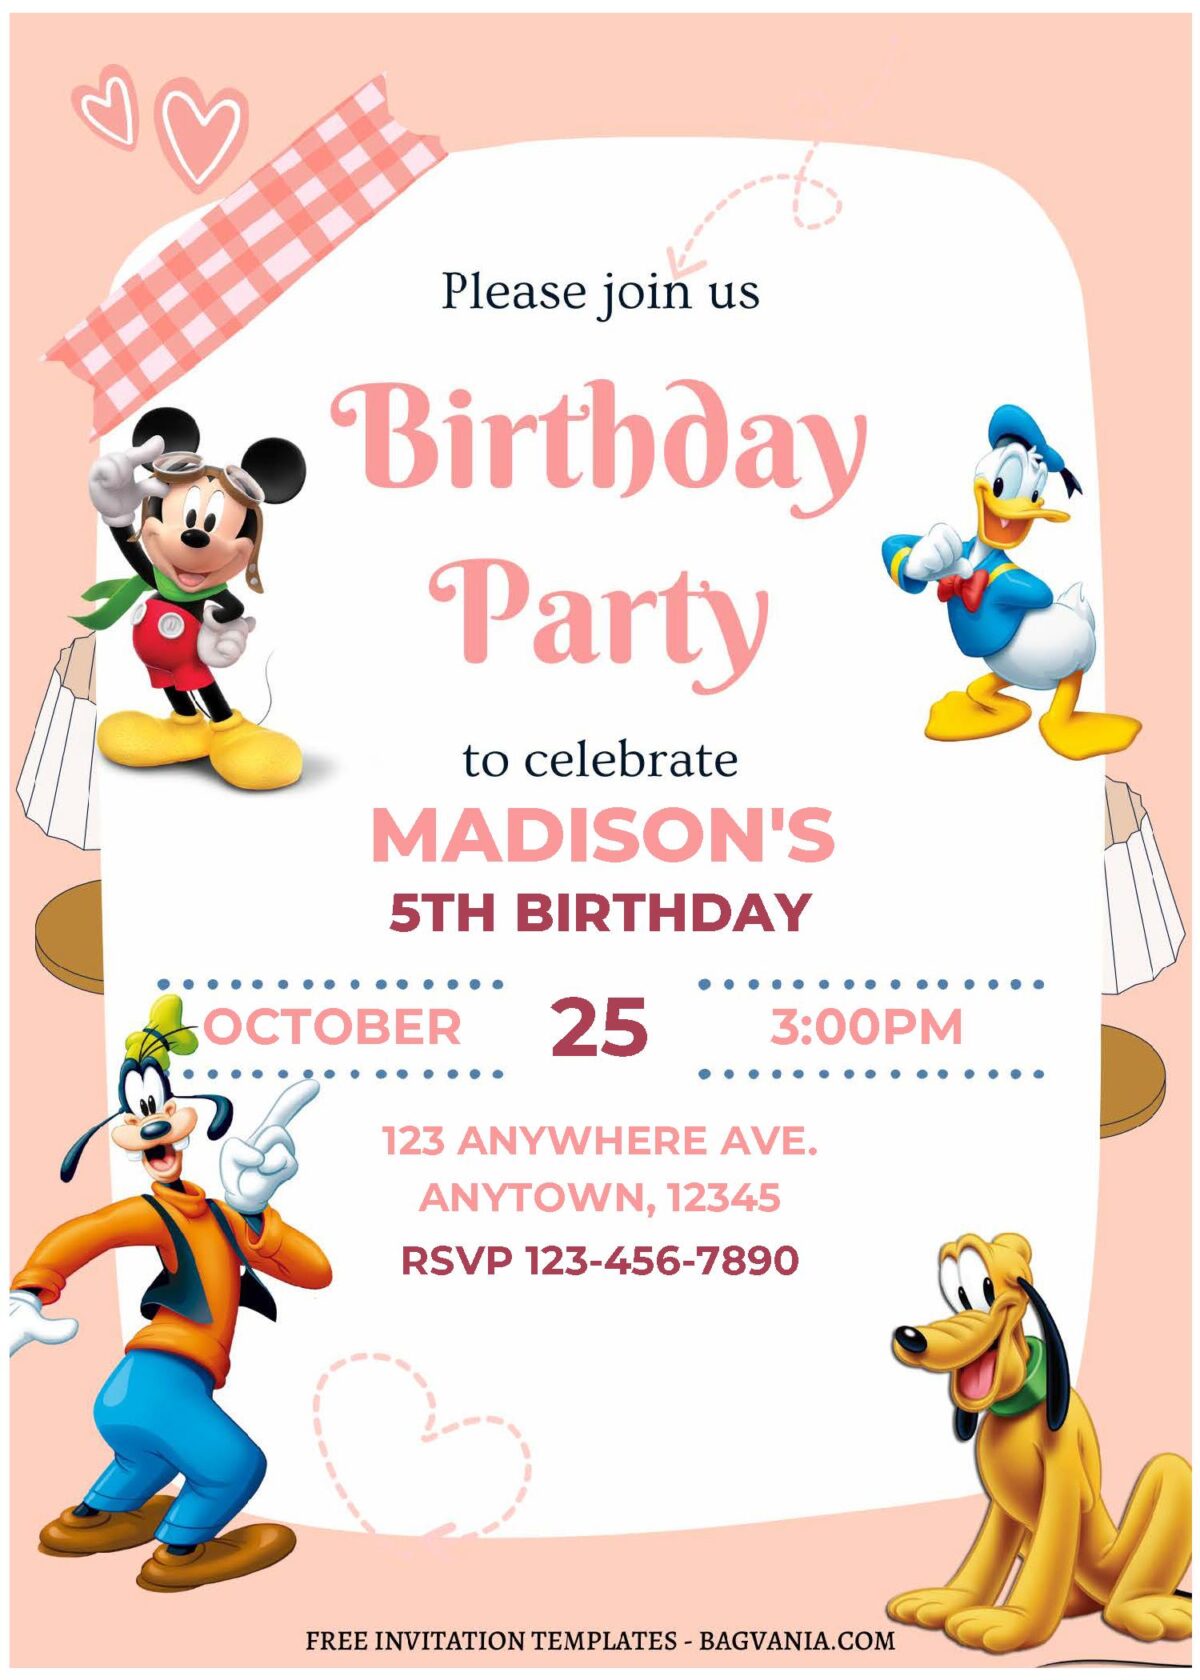 (Free Editable PDF) Mickey Mouse Clubhouse Kids Birthday Invitation Templates C